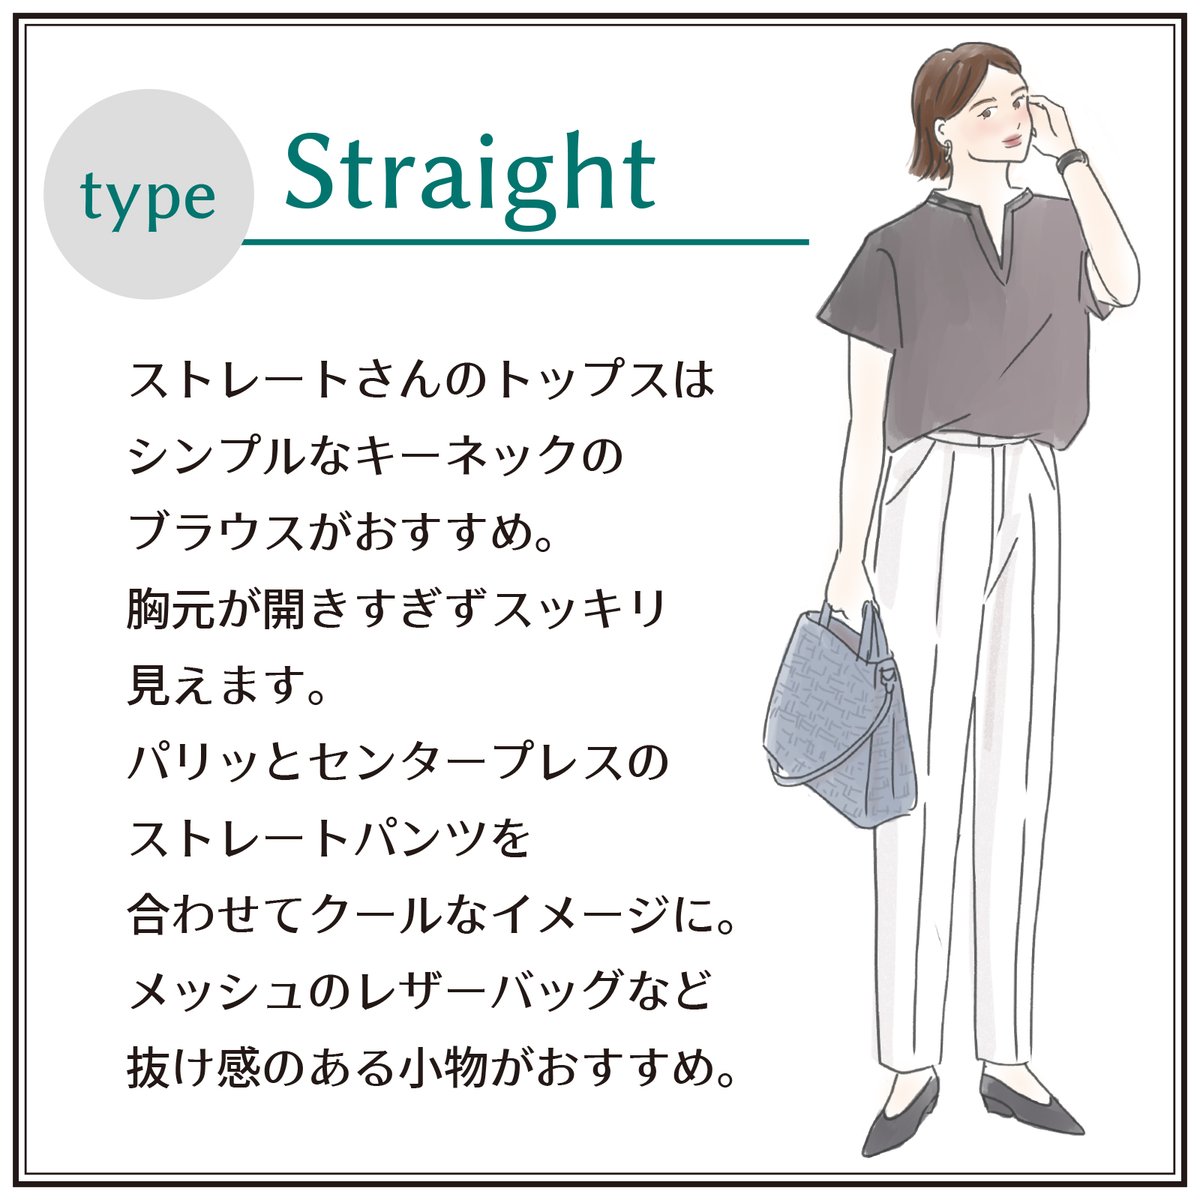 hiromi_styles tweet picture